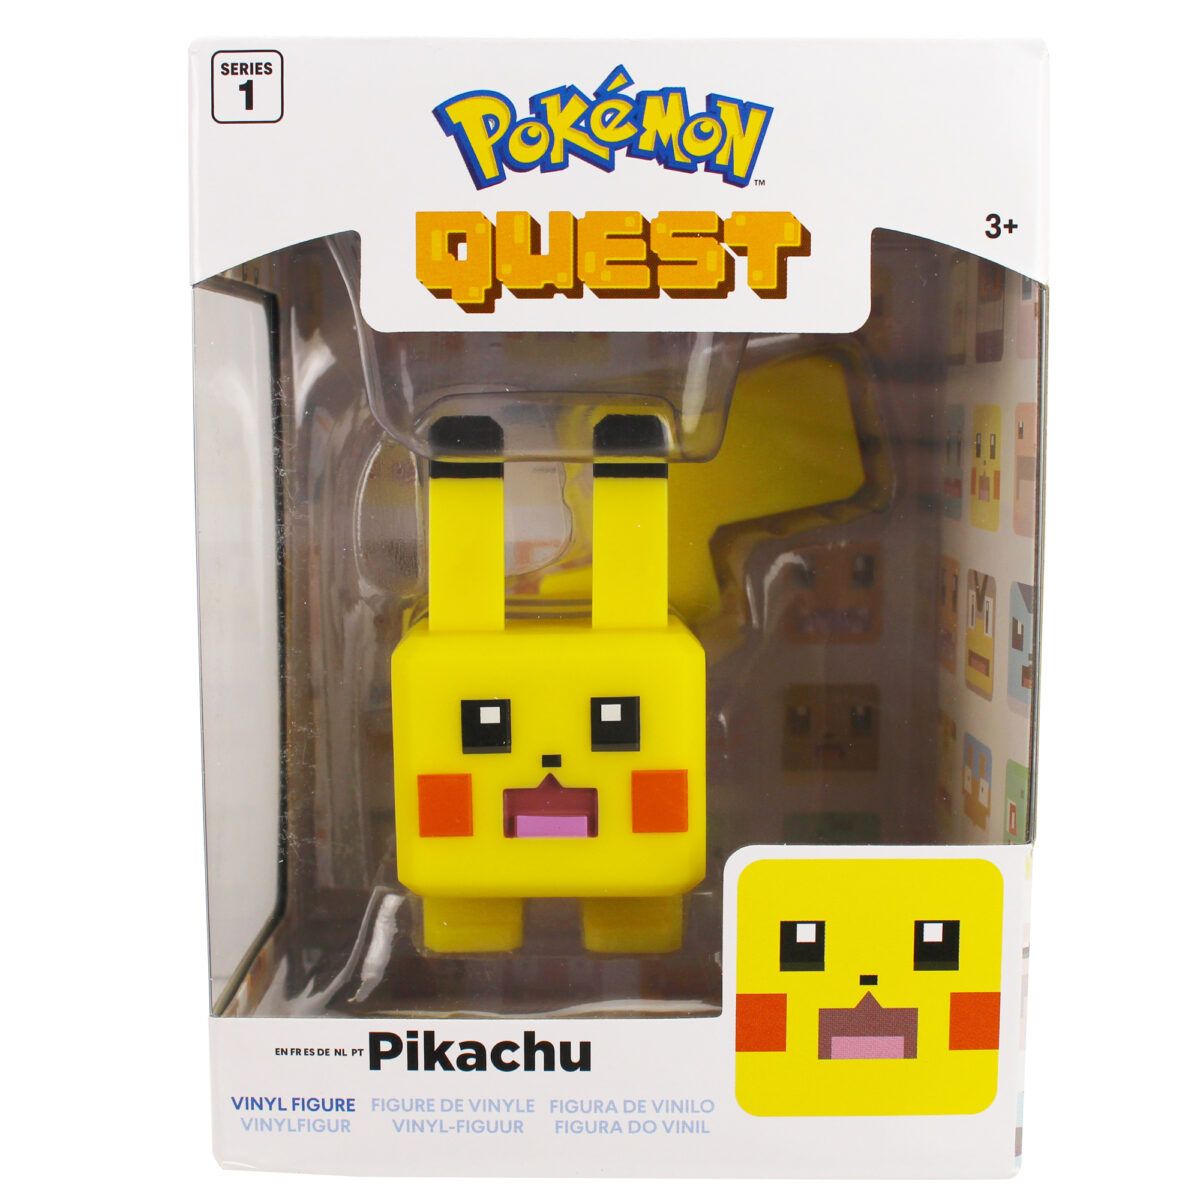 Bloklu Pikachu'nun resmi